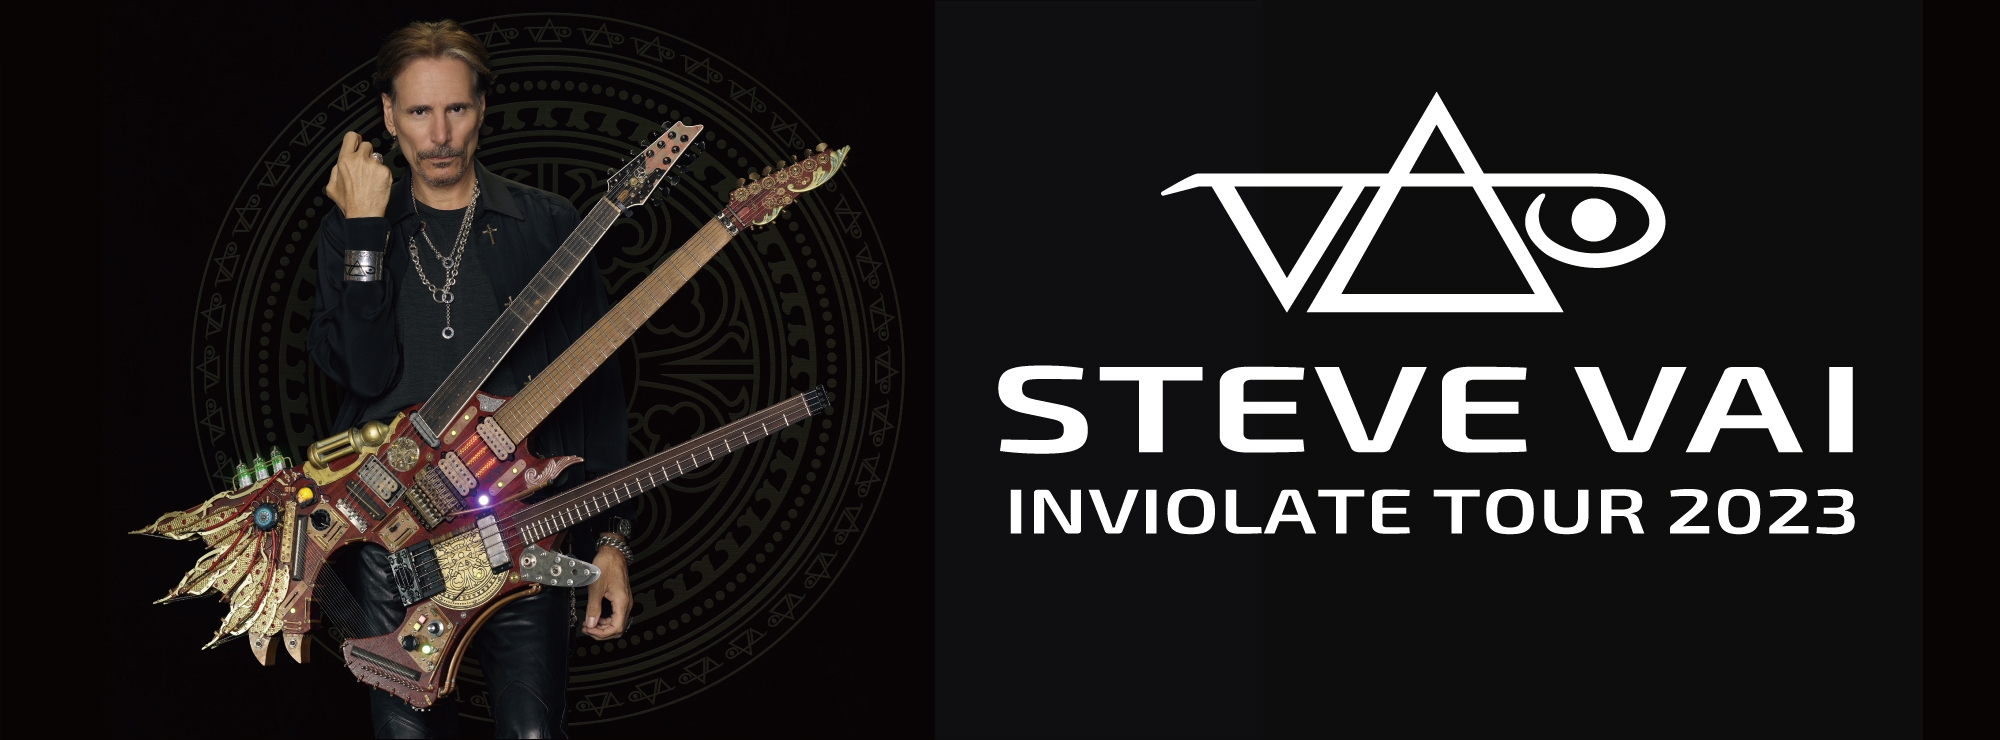 STEVE VAI INVIOLATE TOUR - ウドー音楽事務所